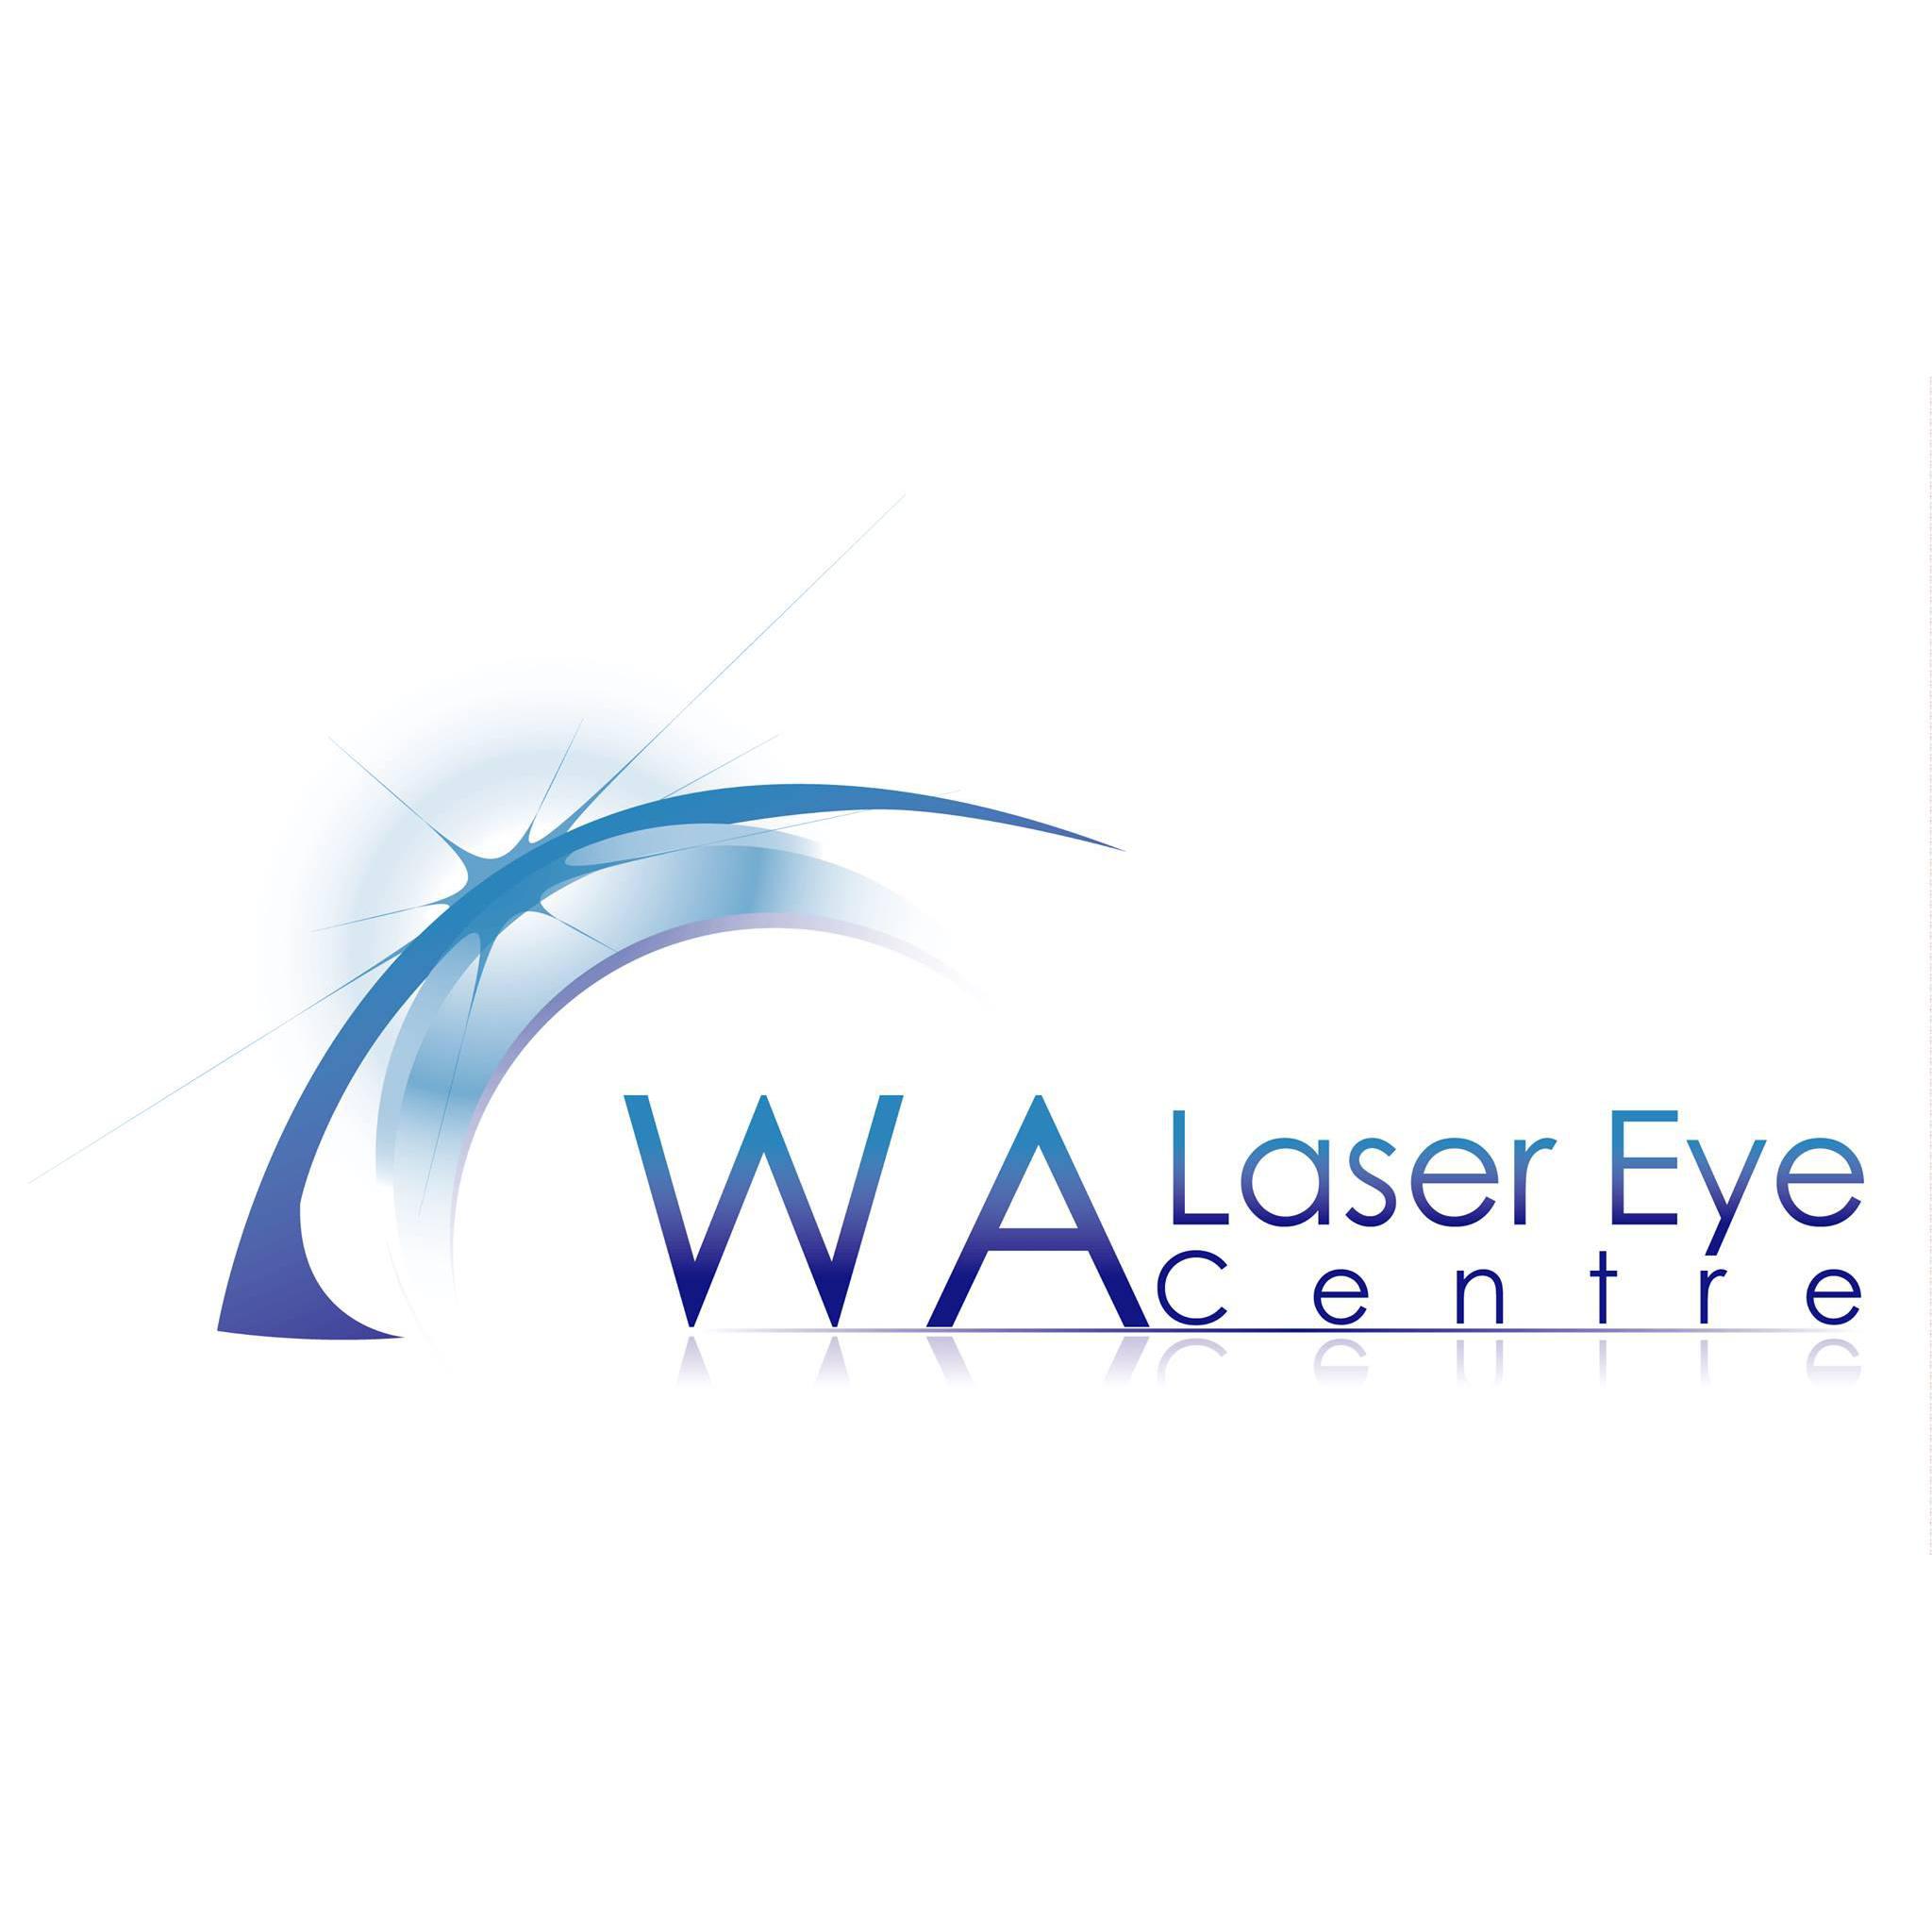 WA Laser Eye Centre Melville (08) 9330 8463